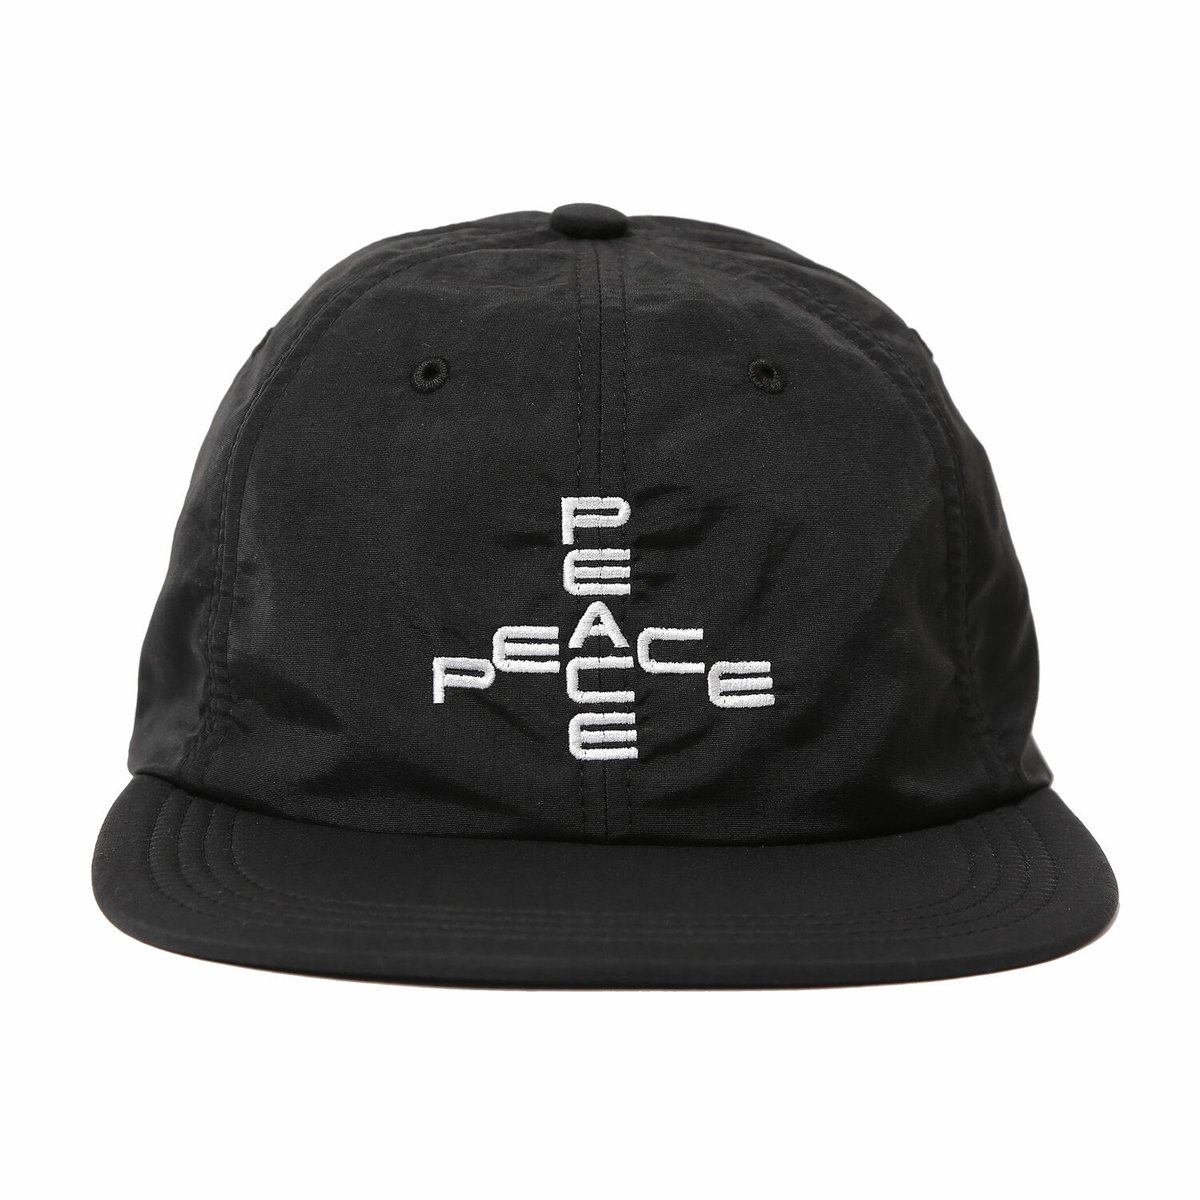 GARBAGE / SOFT BRIM 6 PANEL CAP (PEACE) / BLACK...